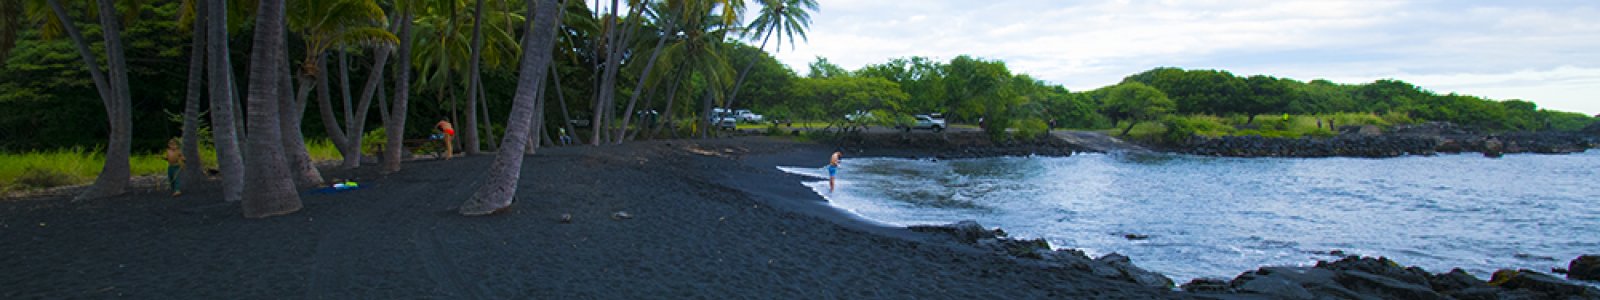 Big Island Black Sand Beaches - Where to Find Them